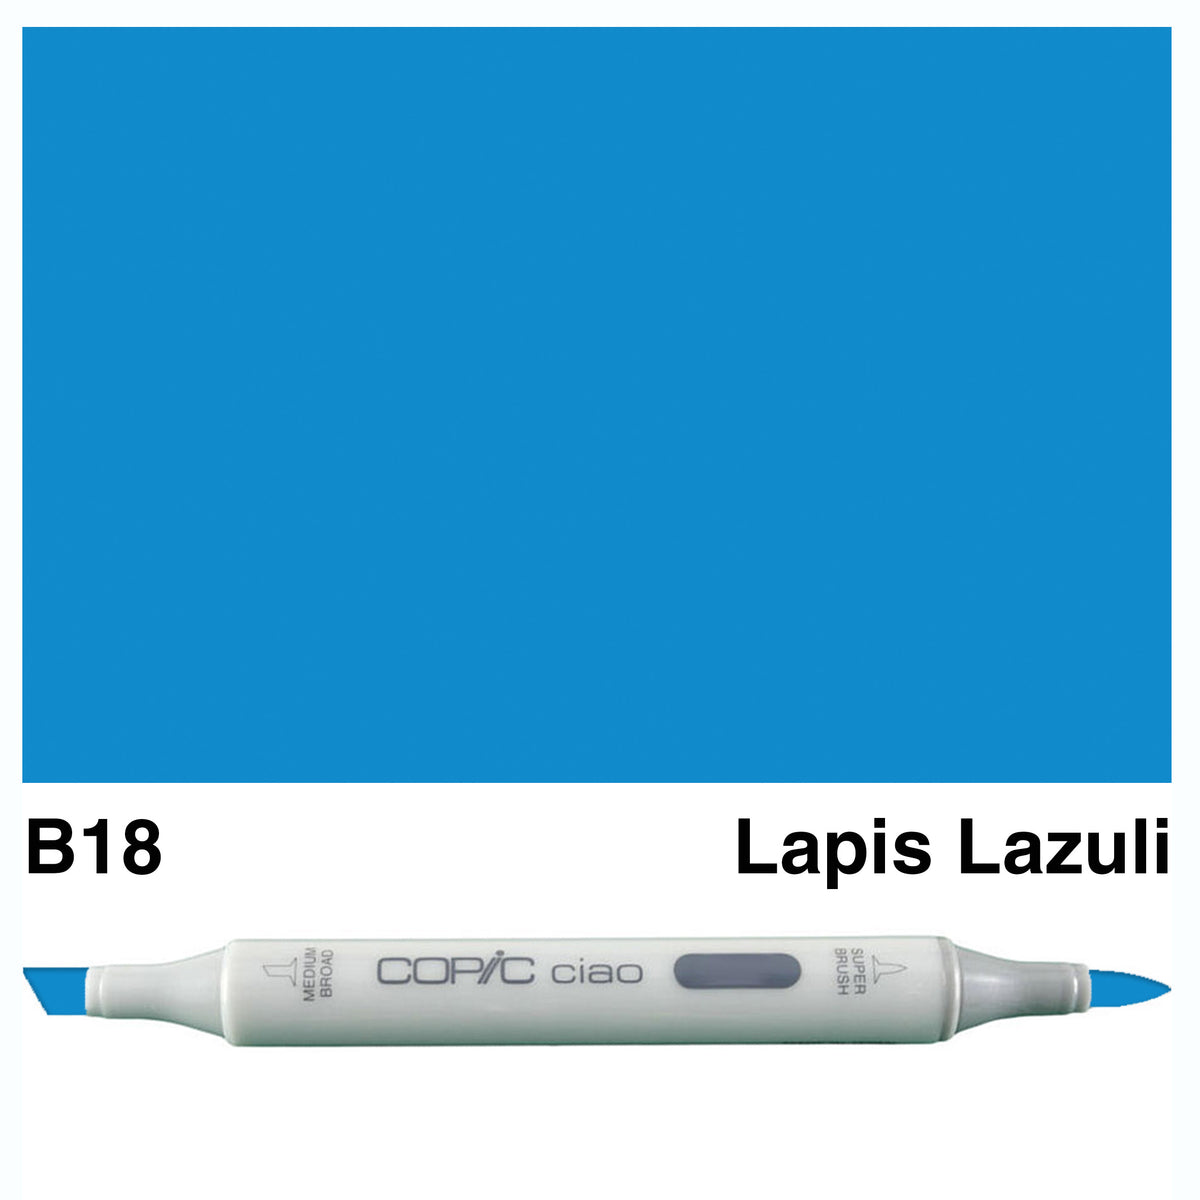 Copic Ciao B18-Lapis Lazuli